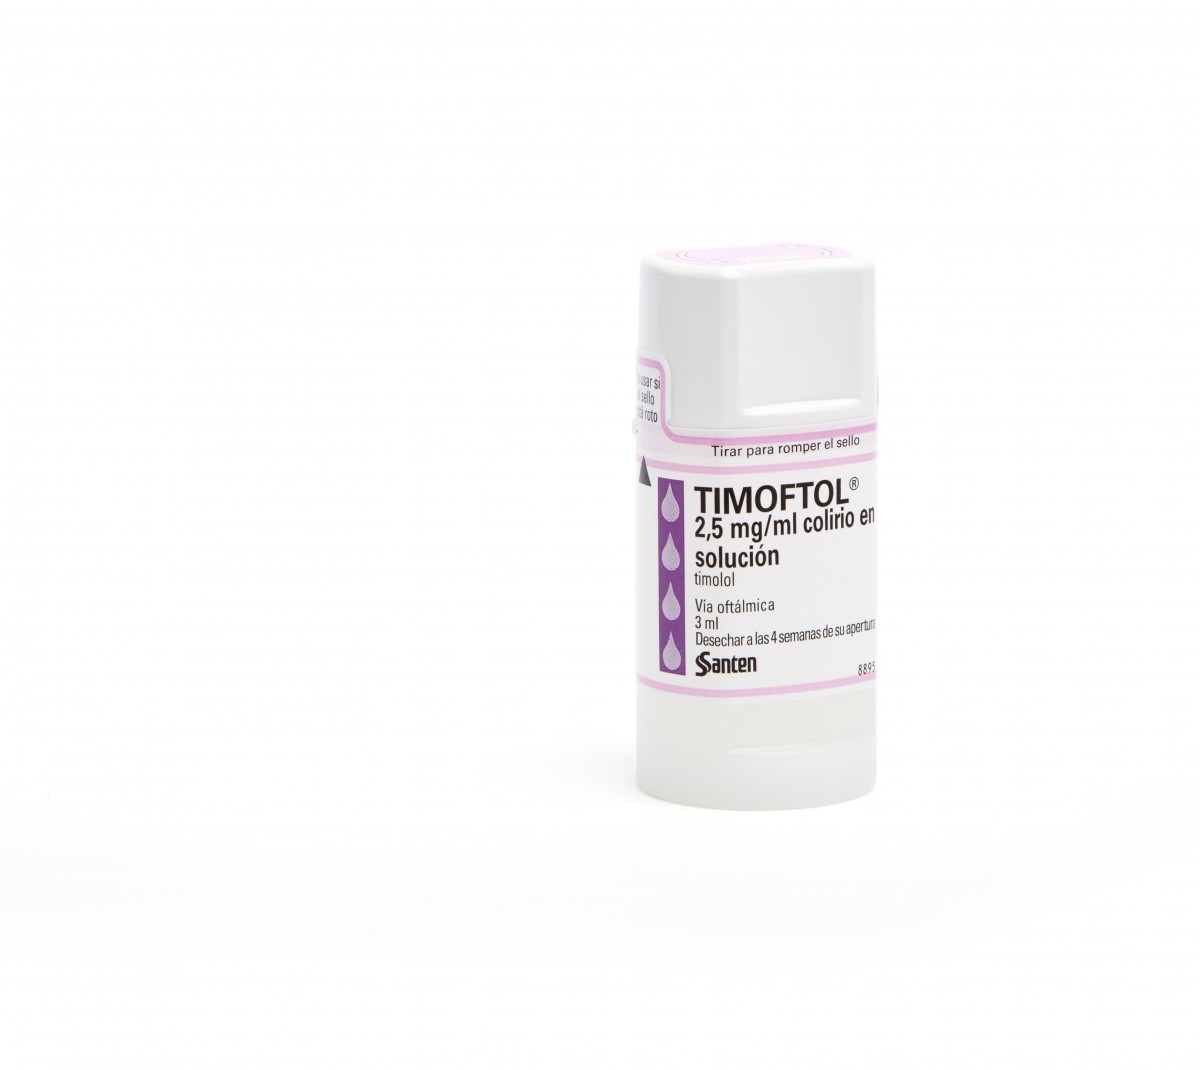 TIMOFTOL 2,5 mg/ml COLIRIO EN SOLUCION, 1 frasco de 5 ml fotografía de la forma farmacéutica.